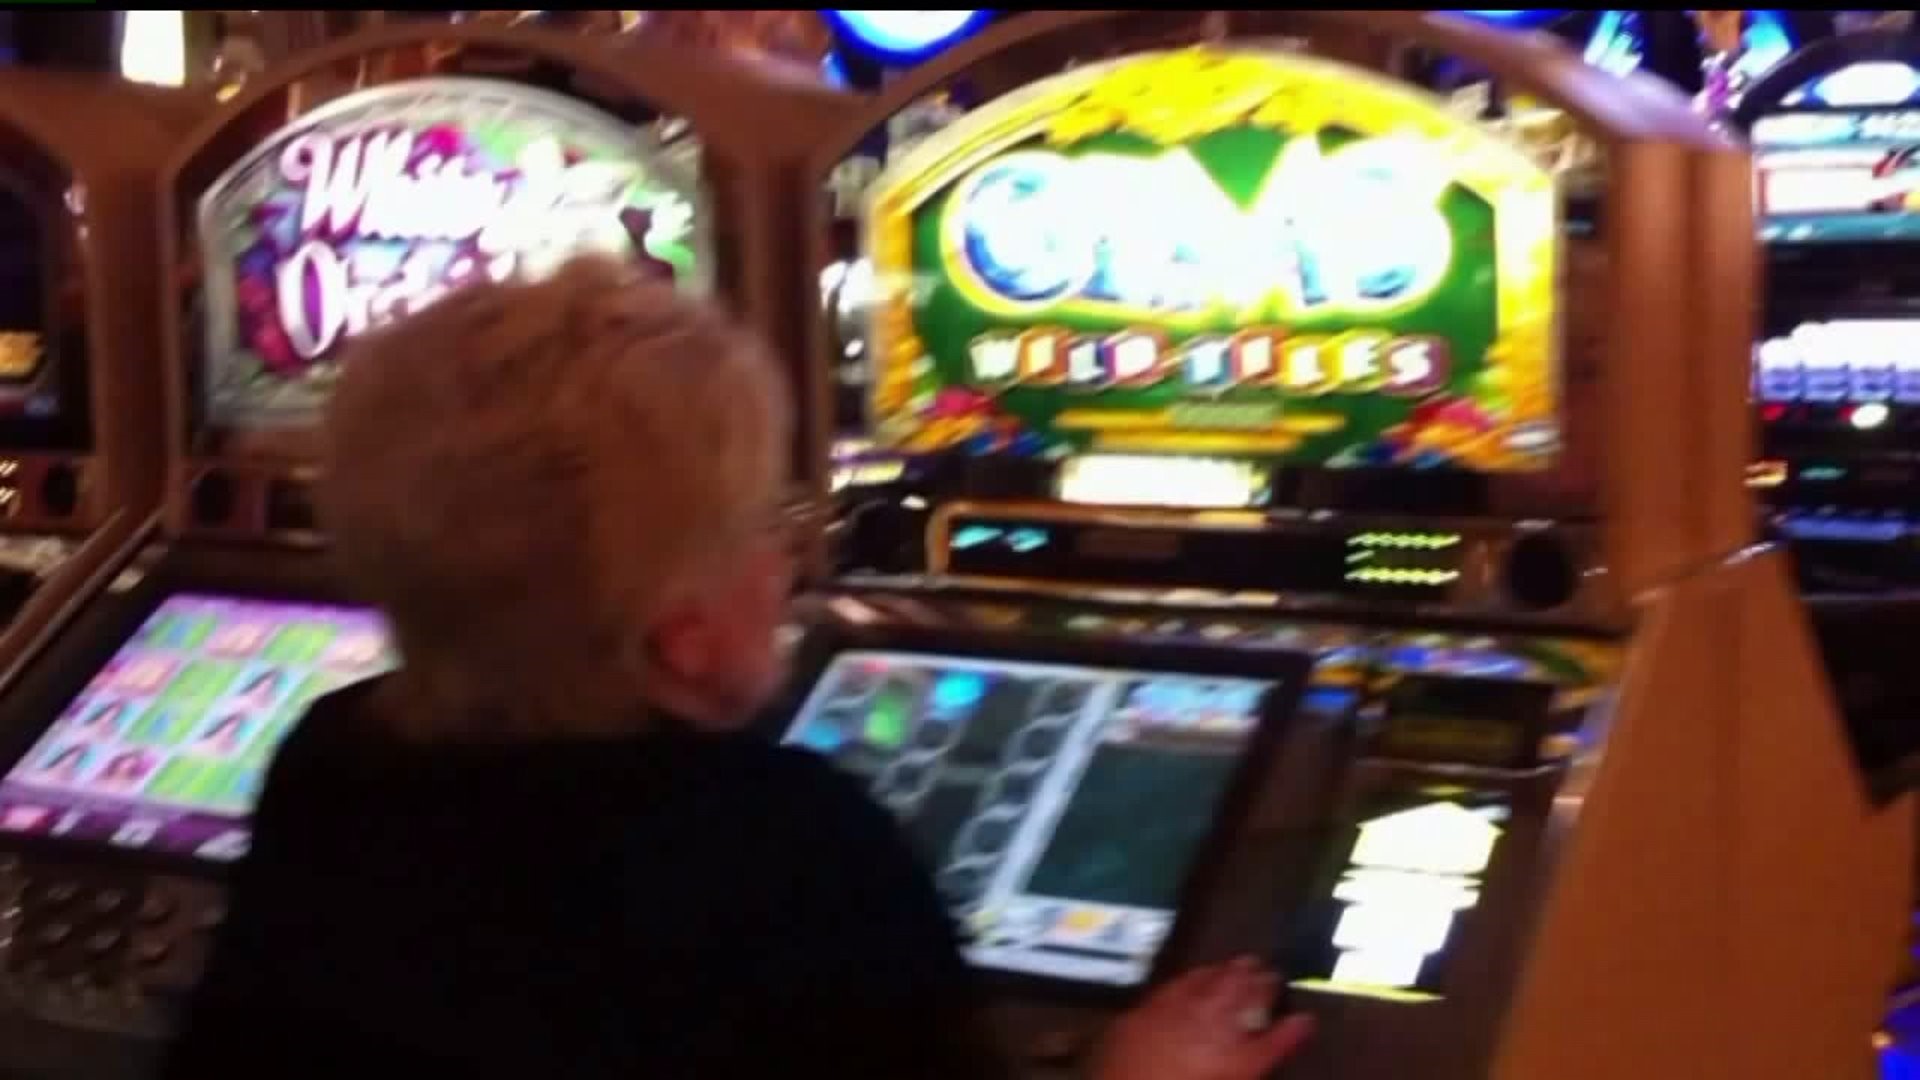 Mini-casino concerns Hellam residents